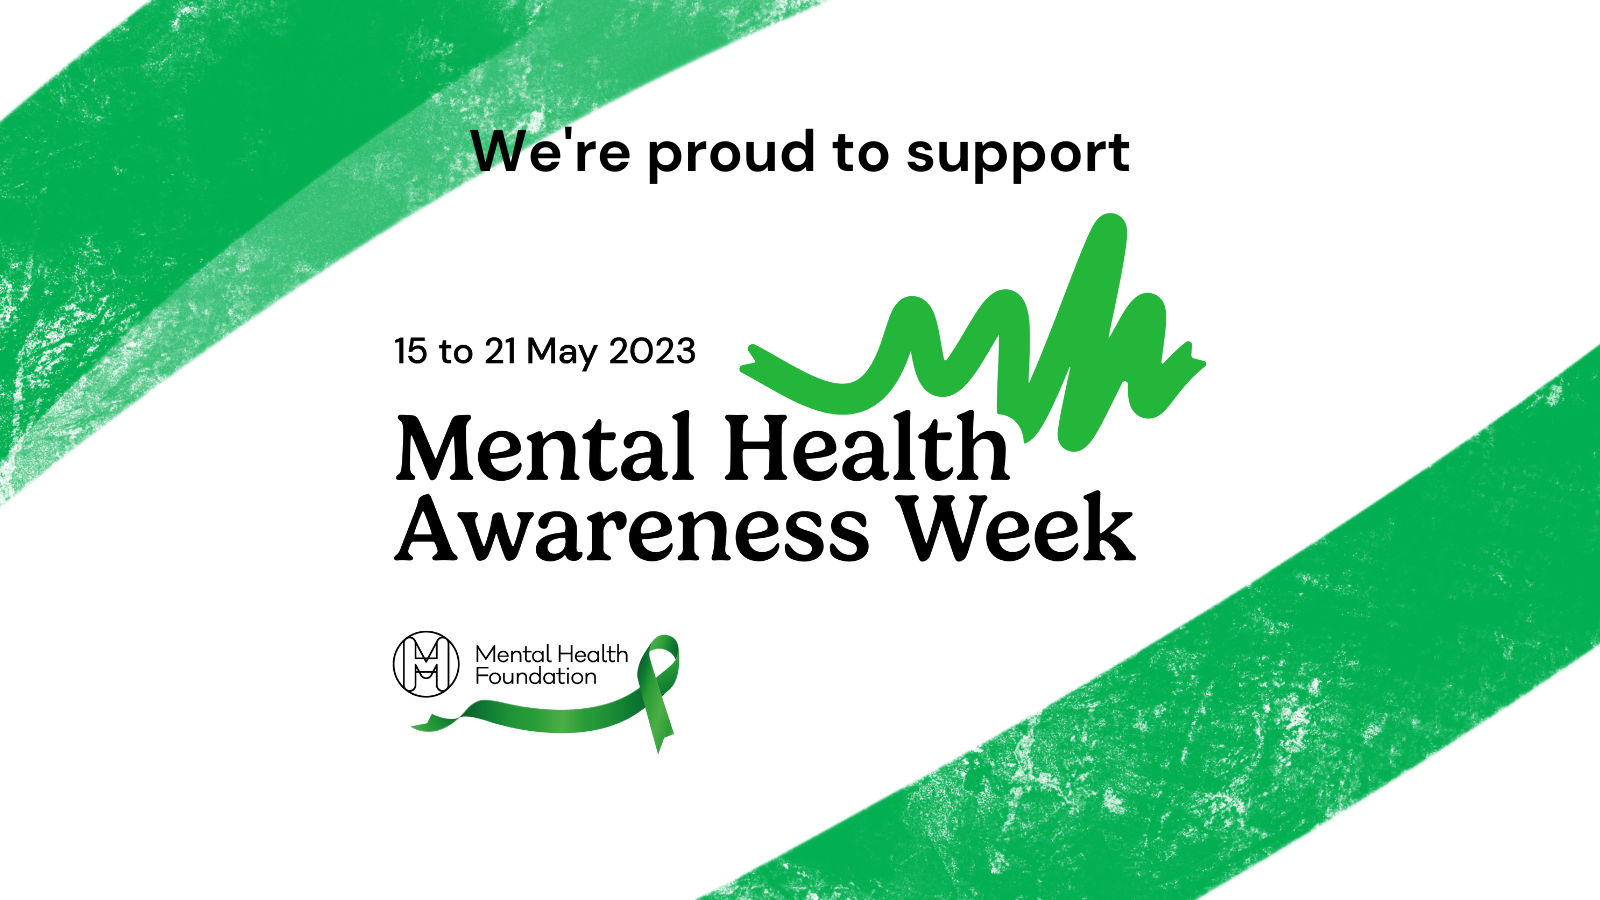 Mental Health Awareness Week 2023 - DL M&E Building Services